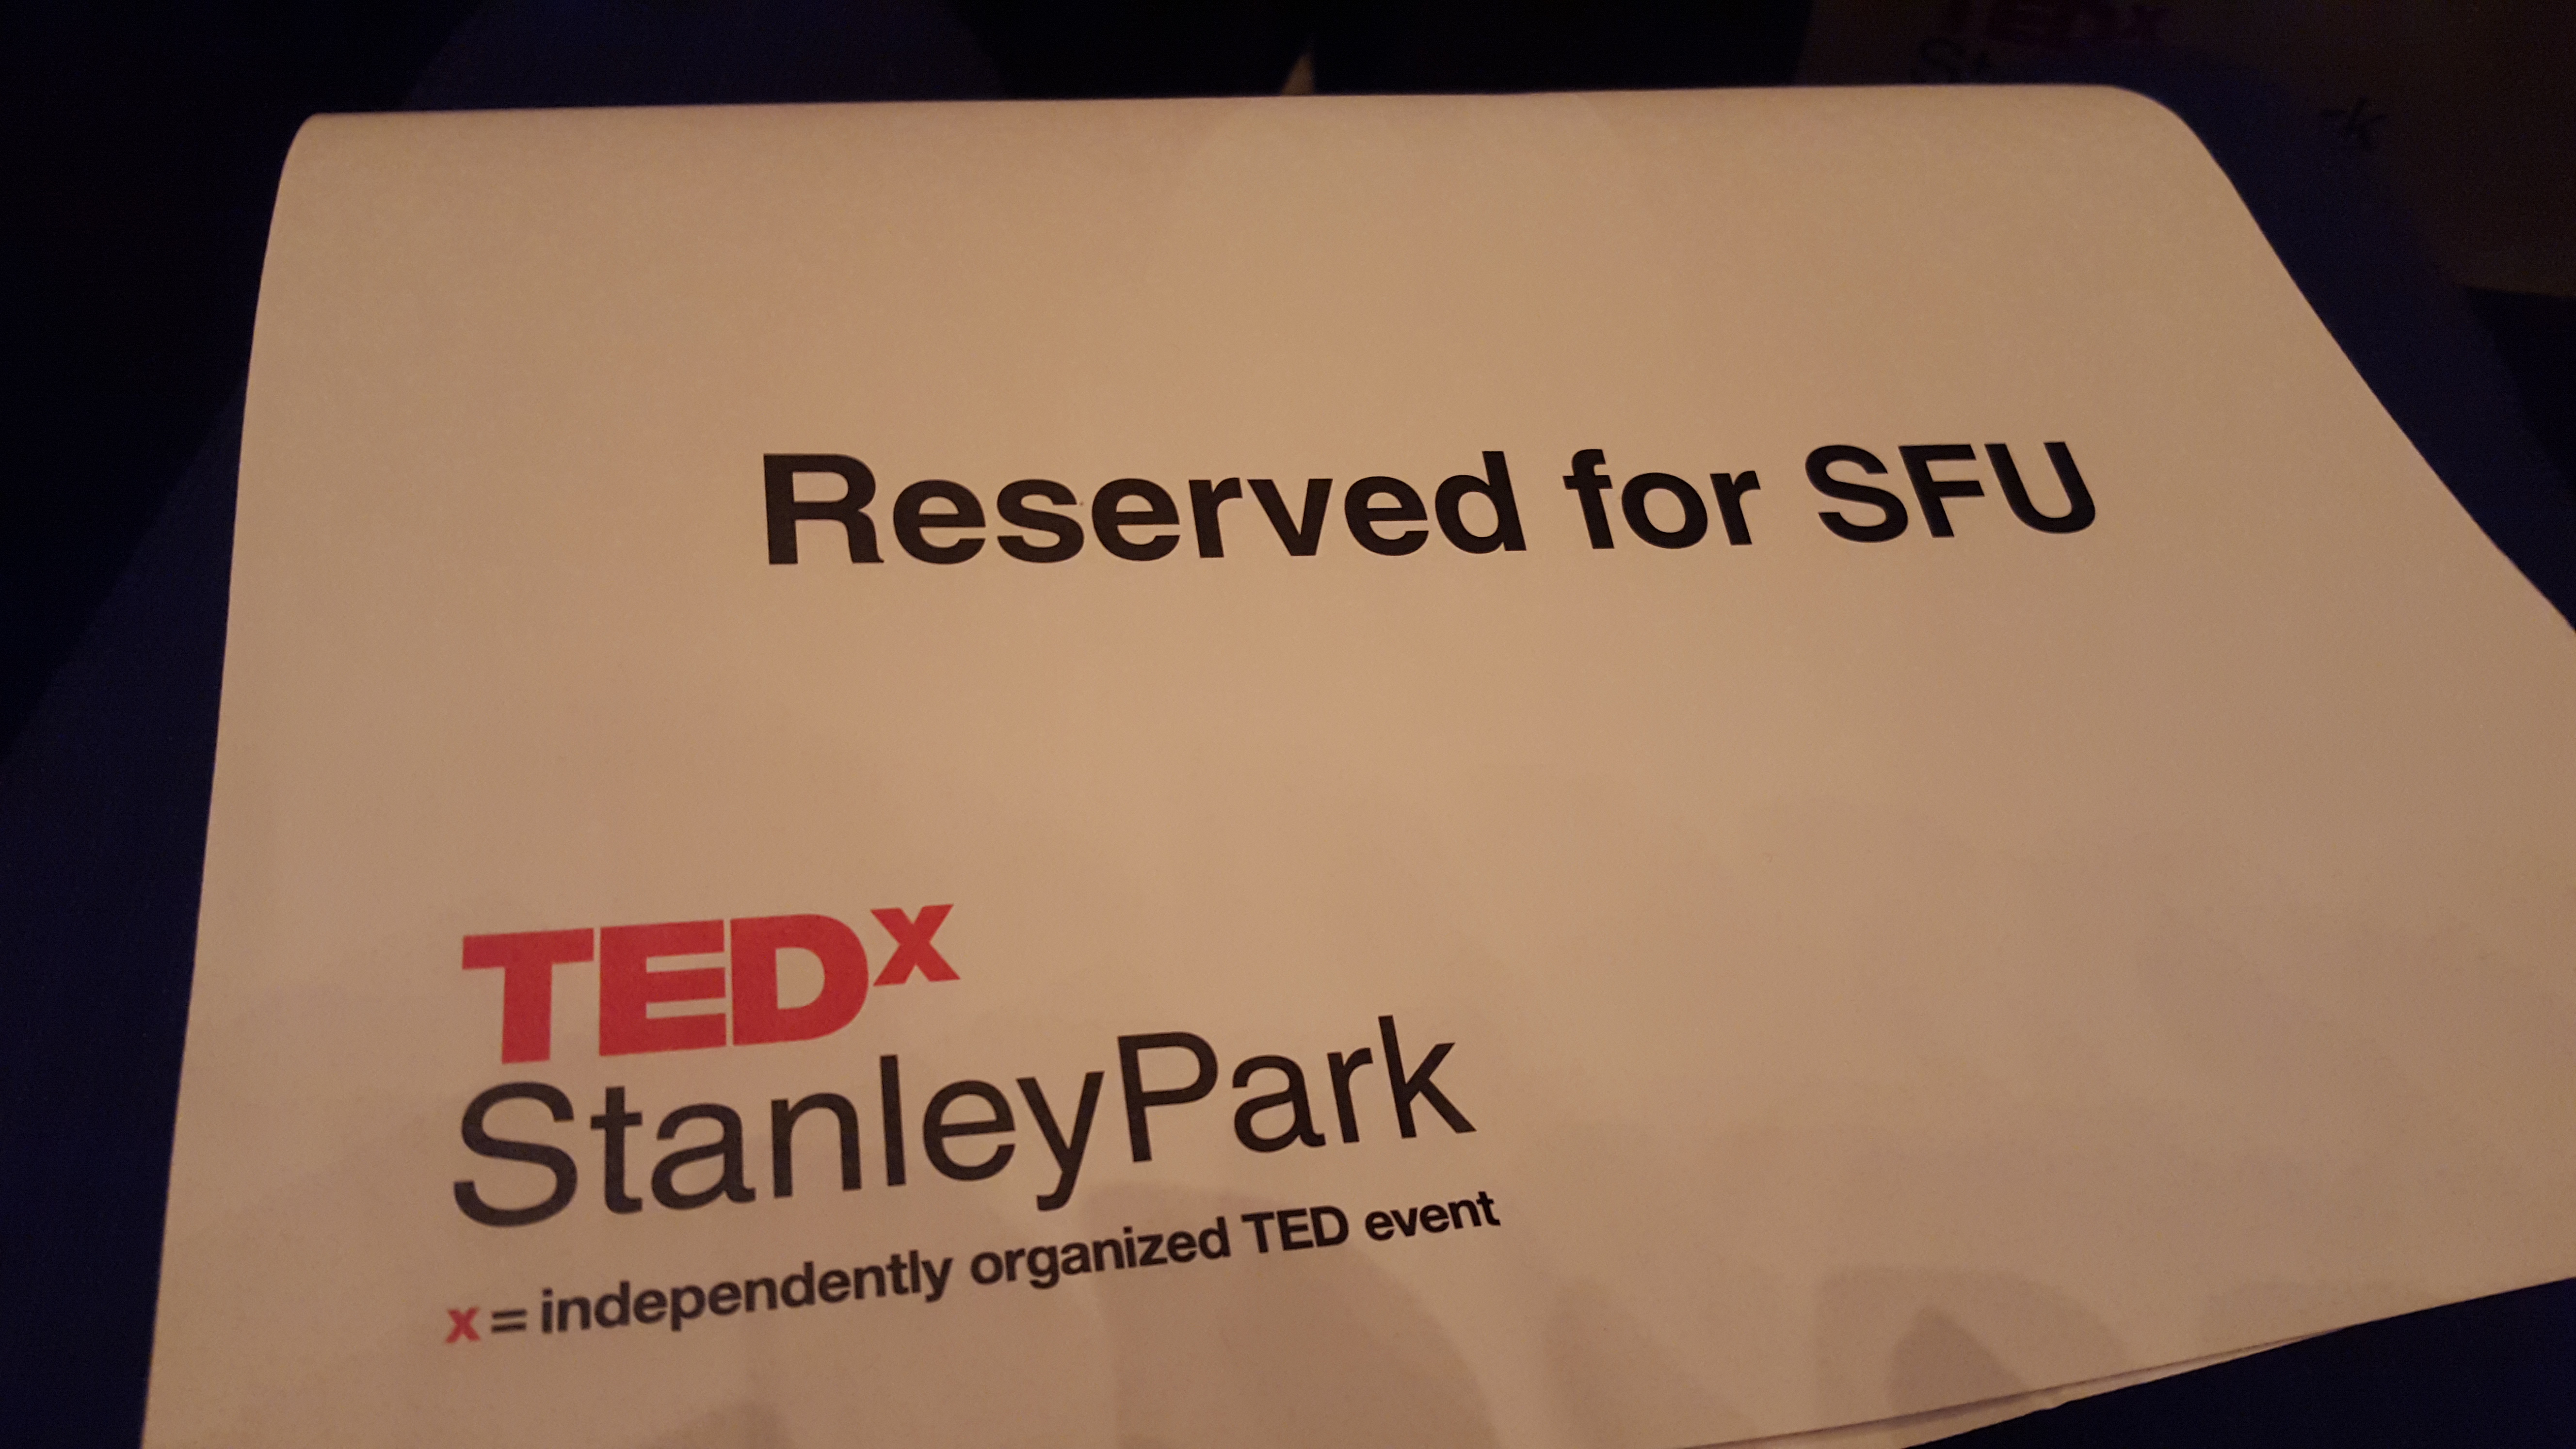 SFU - tedxstanley park